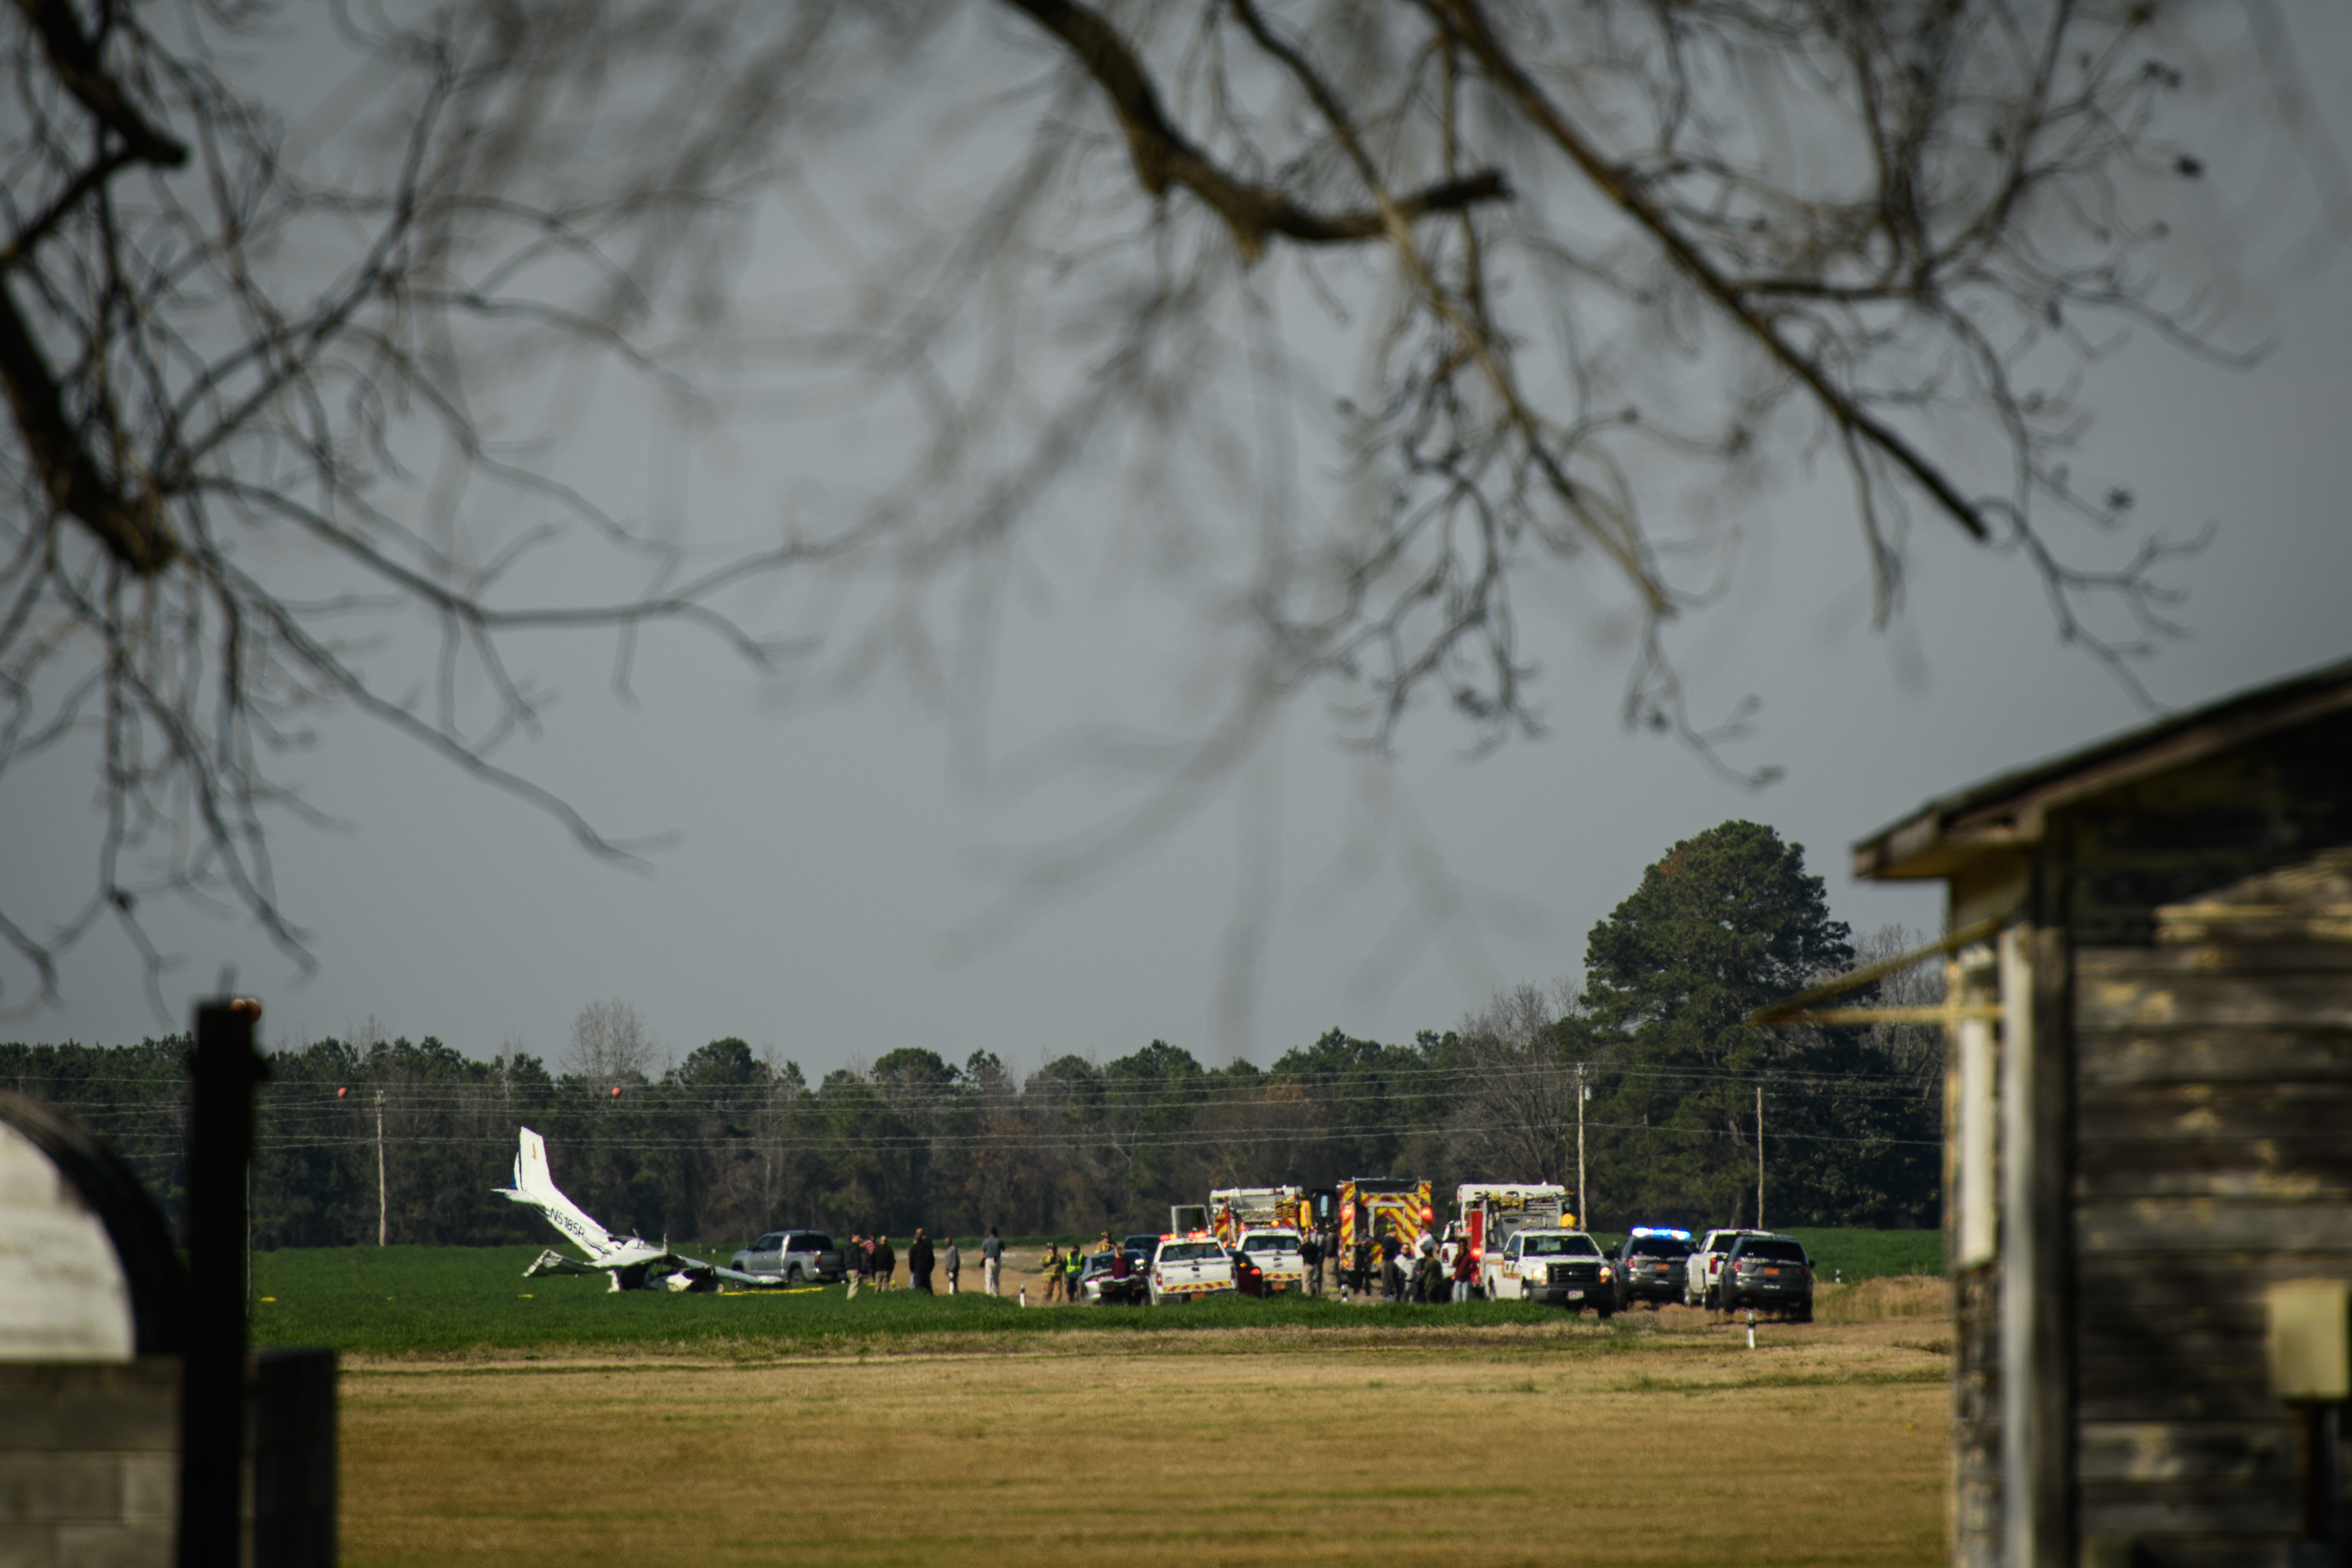 911 call: Gray's Creek Airport crash - Call 1